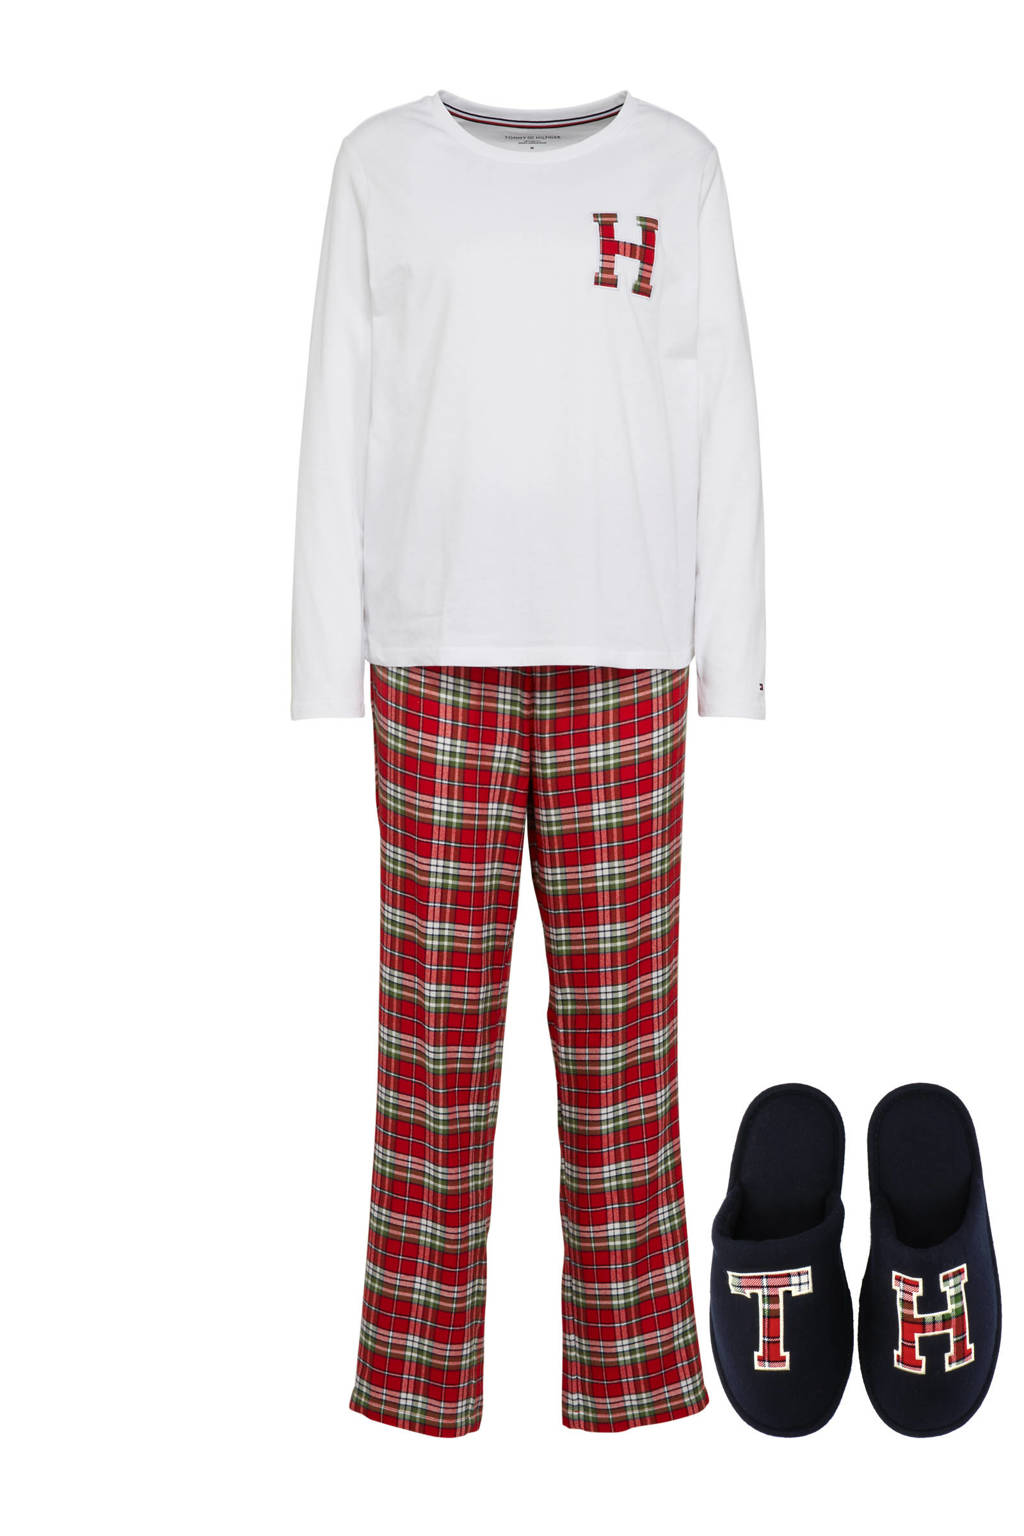 Tommy Hilfiger giftbox pyjama + sloffen met ruit wit/rood/blauw, Wit/rood/blauw